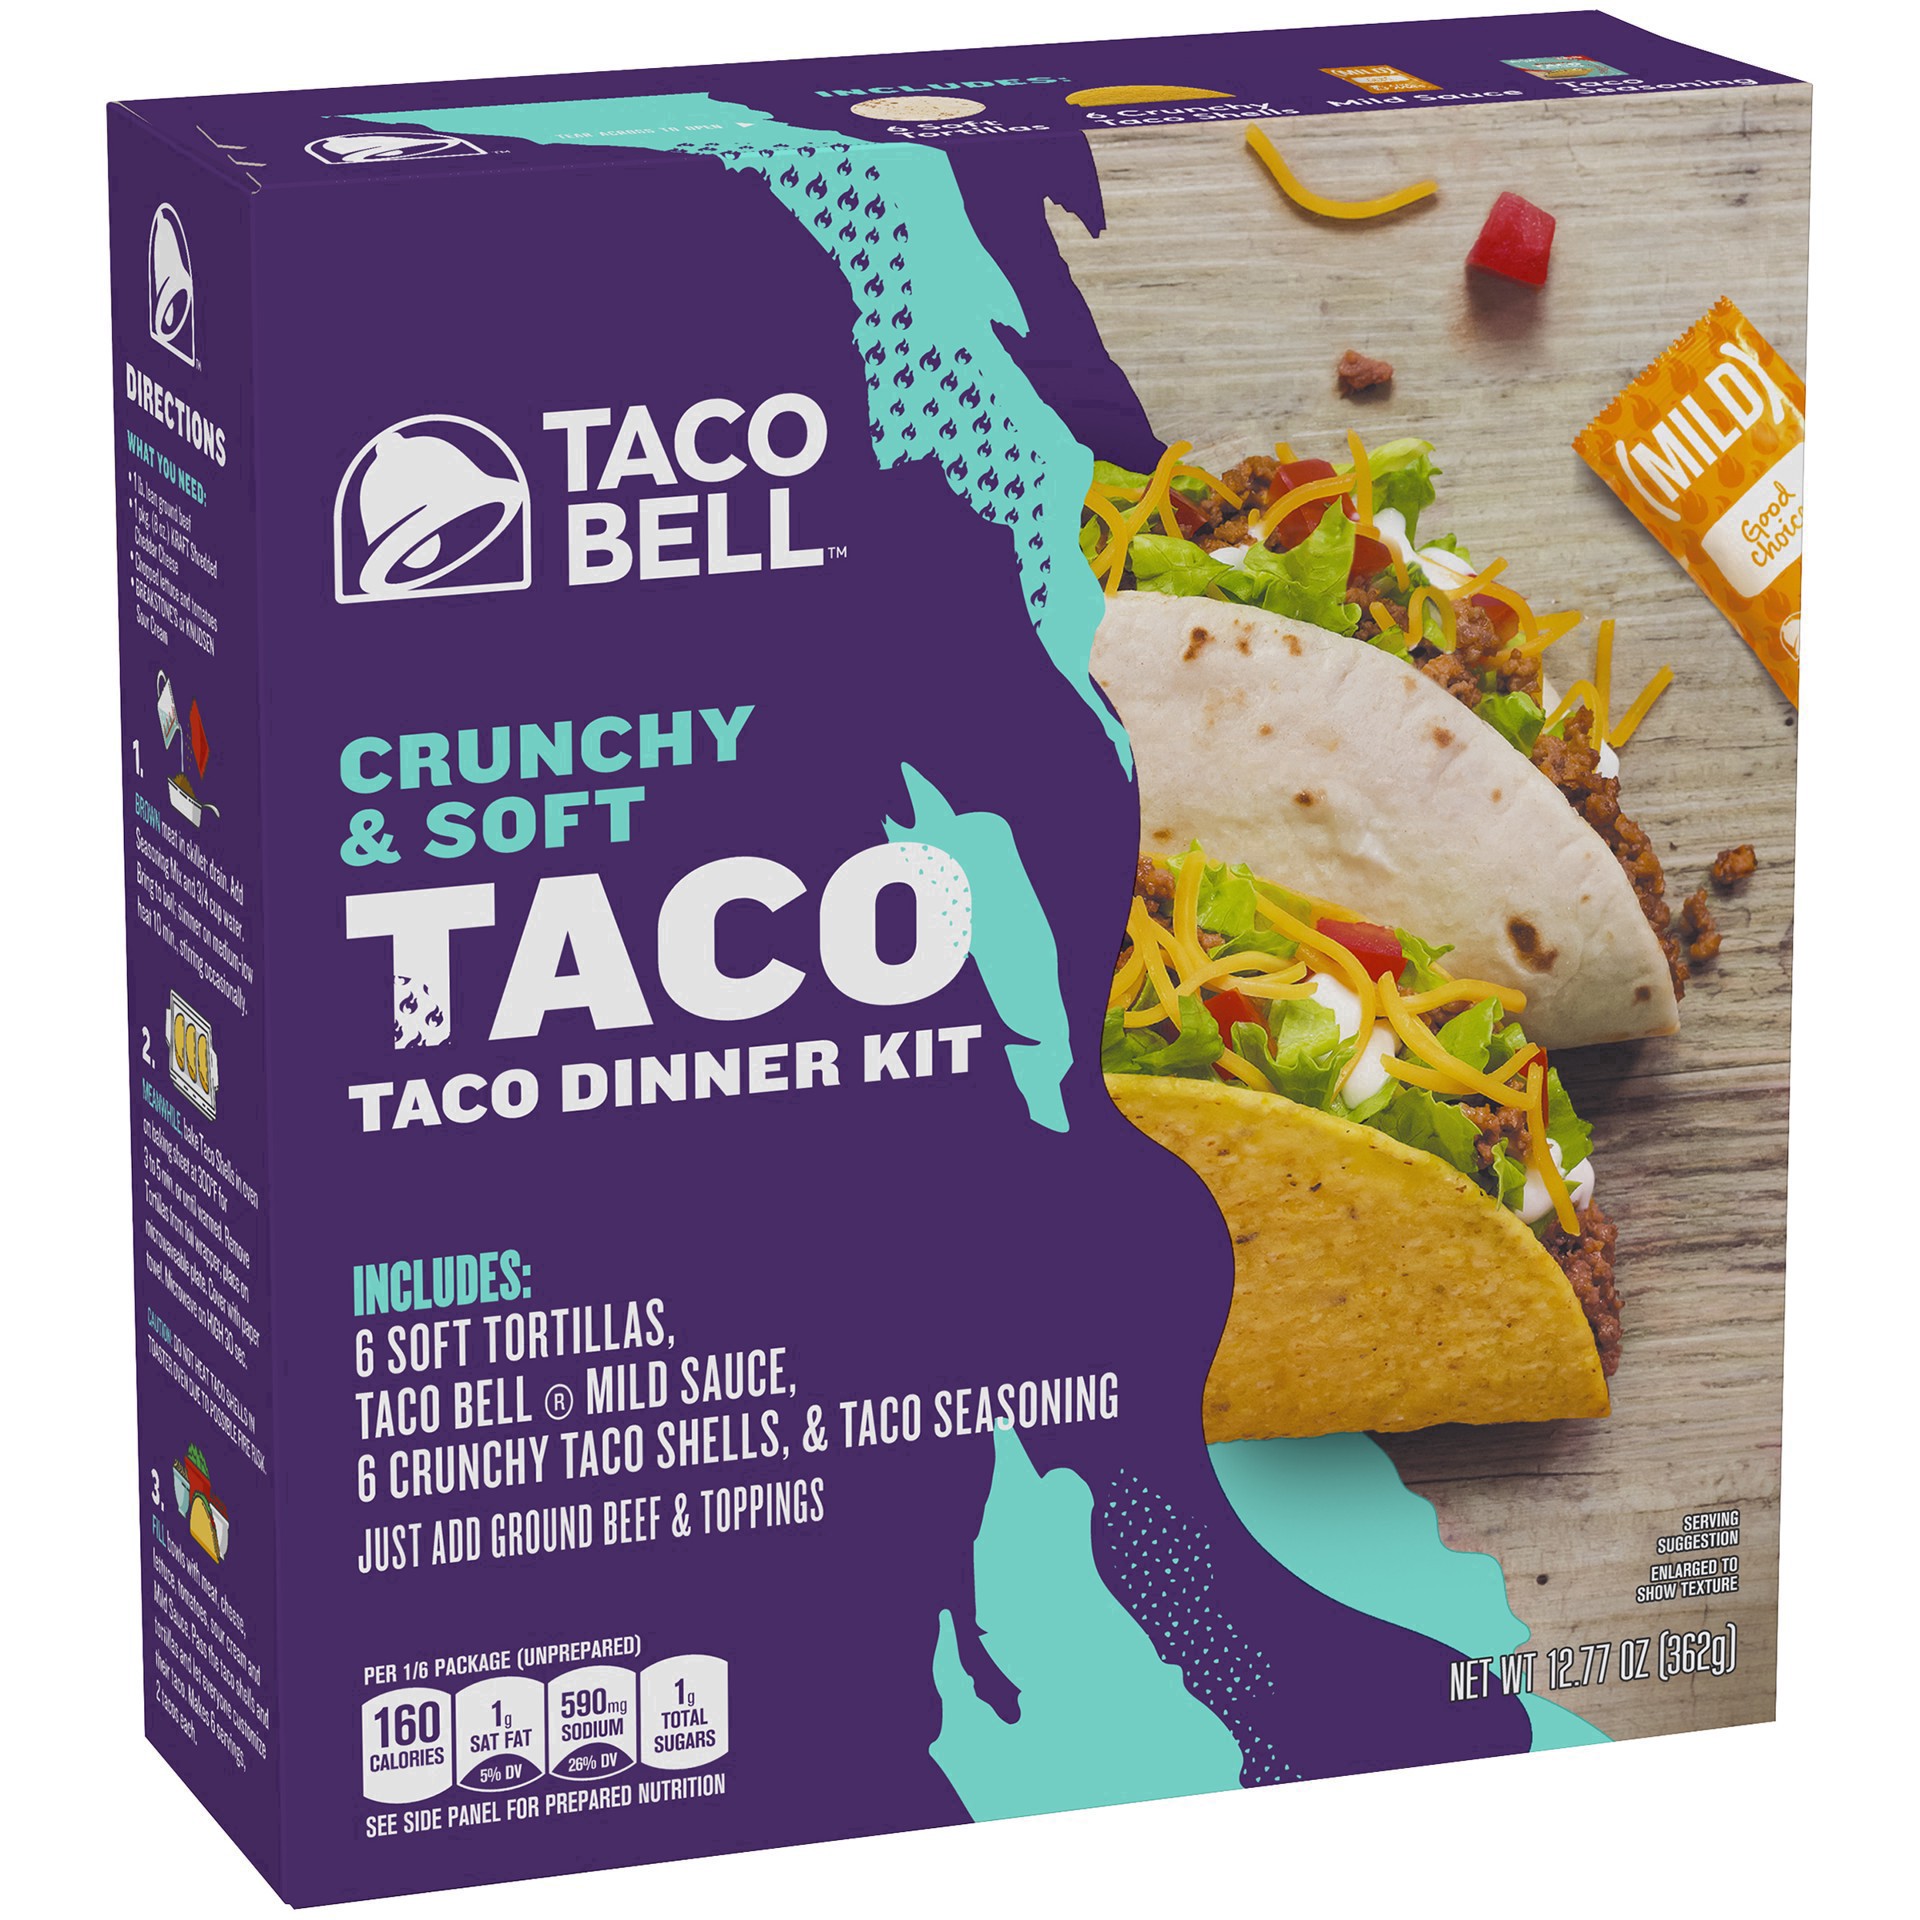 slide 59 of 101, Taco Bell Crunchy & Soft Taco Cravings Kit with 6 Soft Tortillas, 6 Crunchy Taco Shells, Taco Bell Mild Sauce & Seasoning, 12.77 oz Box, 1 ct